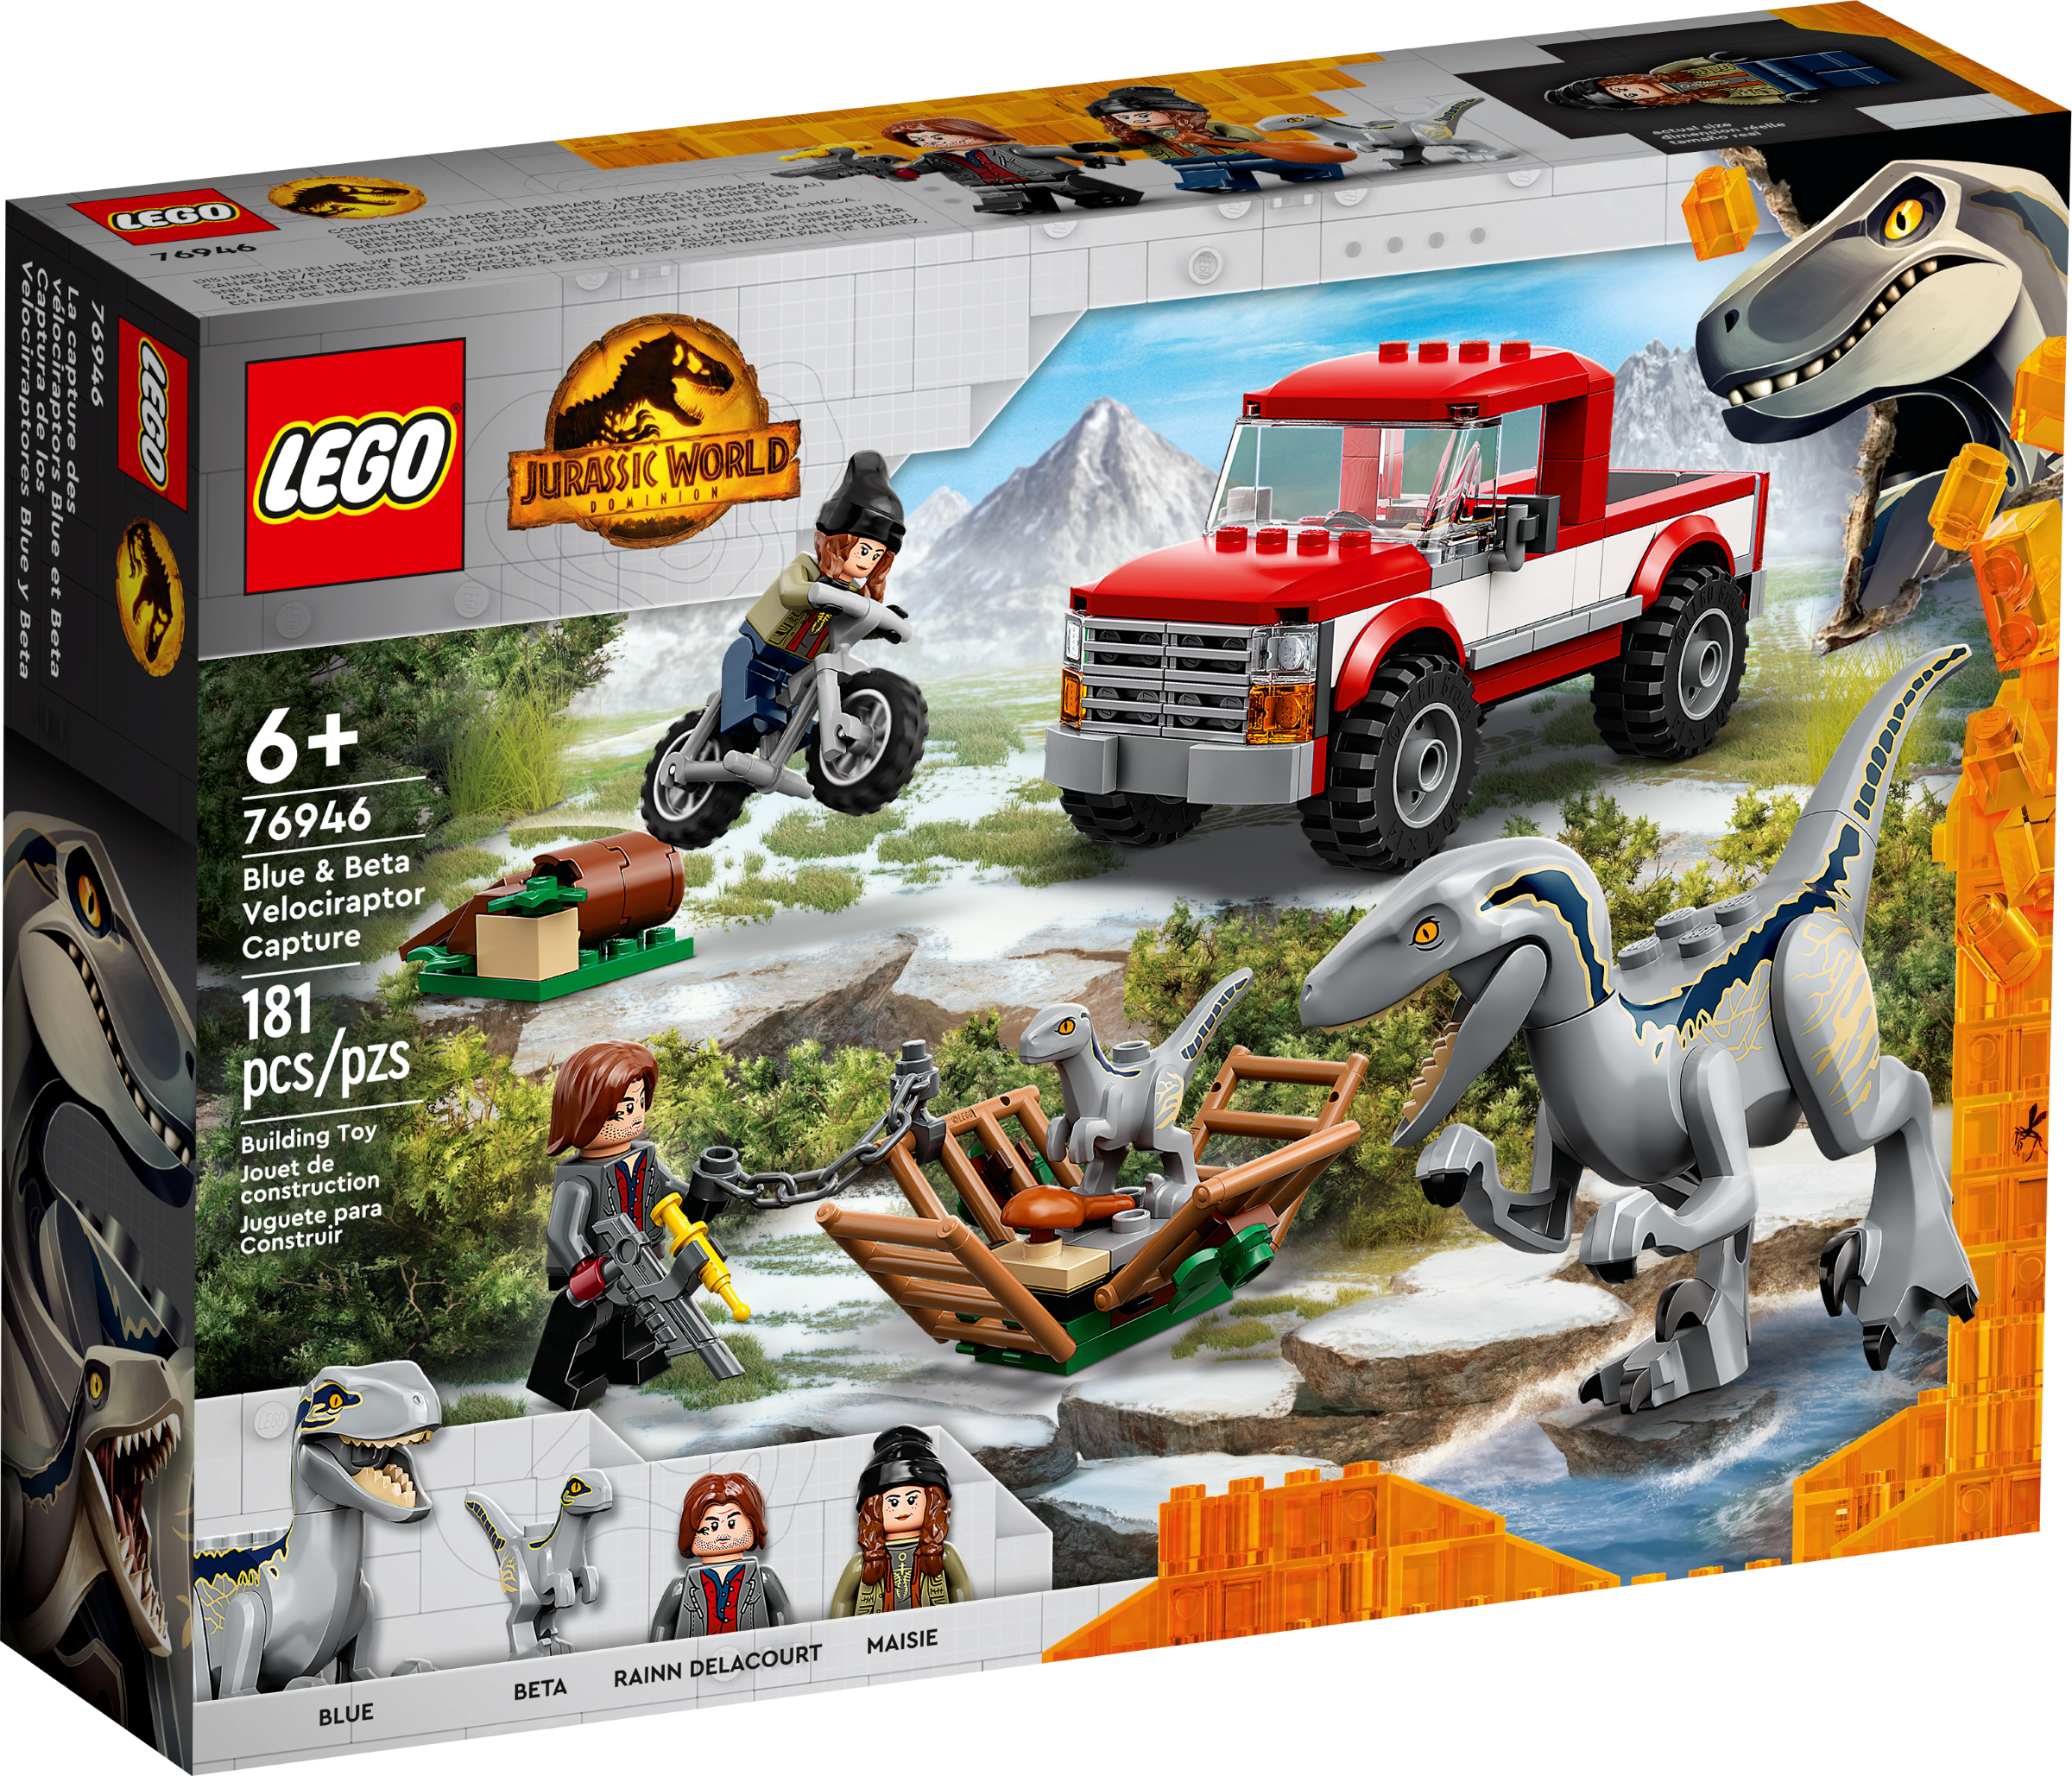 Blue & Beta Velociraptor Capture 76946 | Jurassic World™ | LEGO 